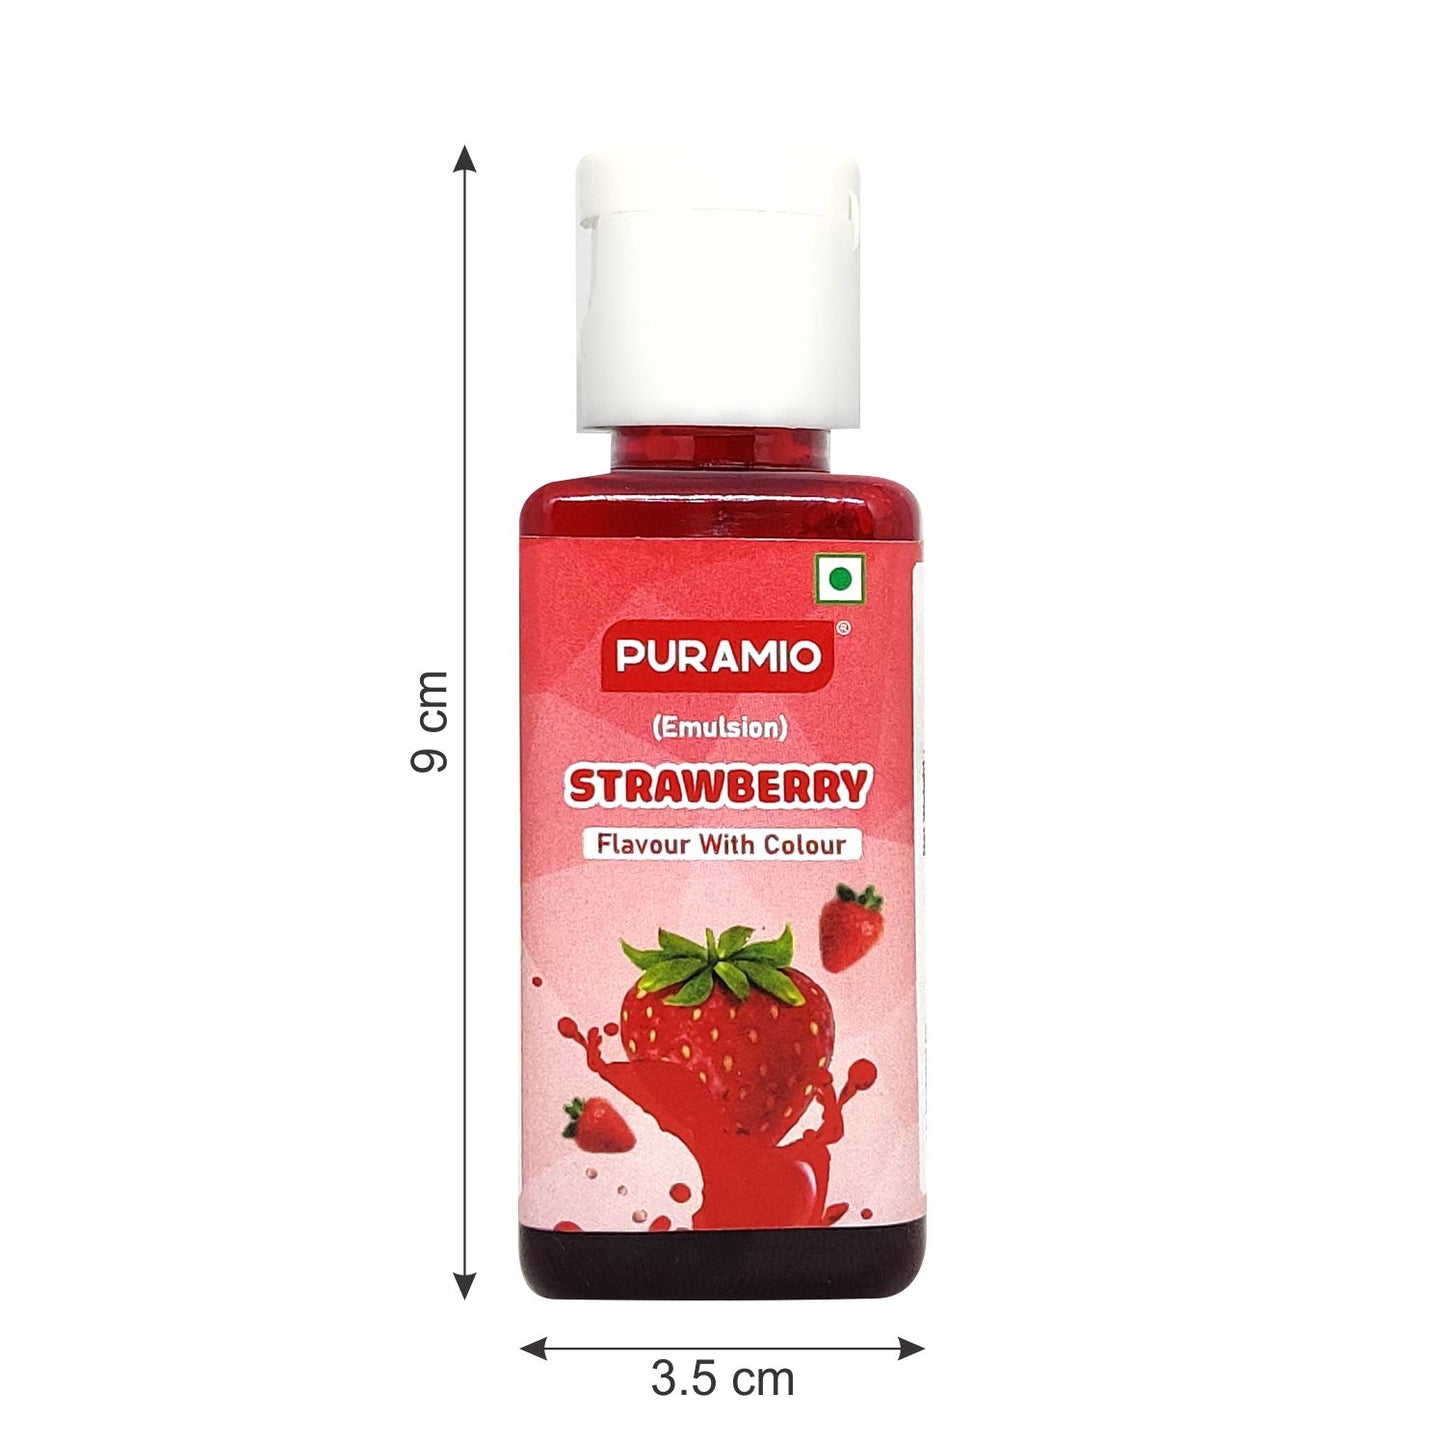 Puramio Strawberry- Flavour with Colour (Emulsion)